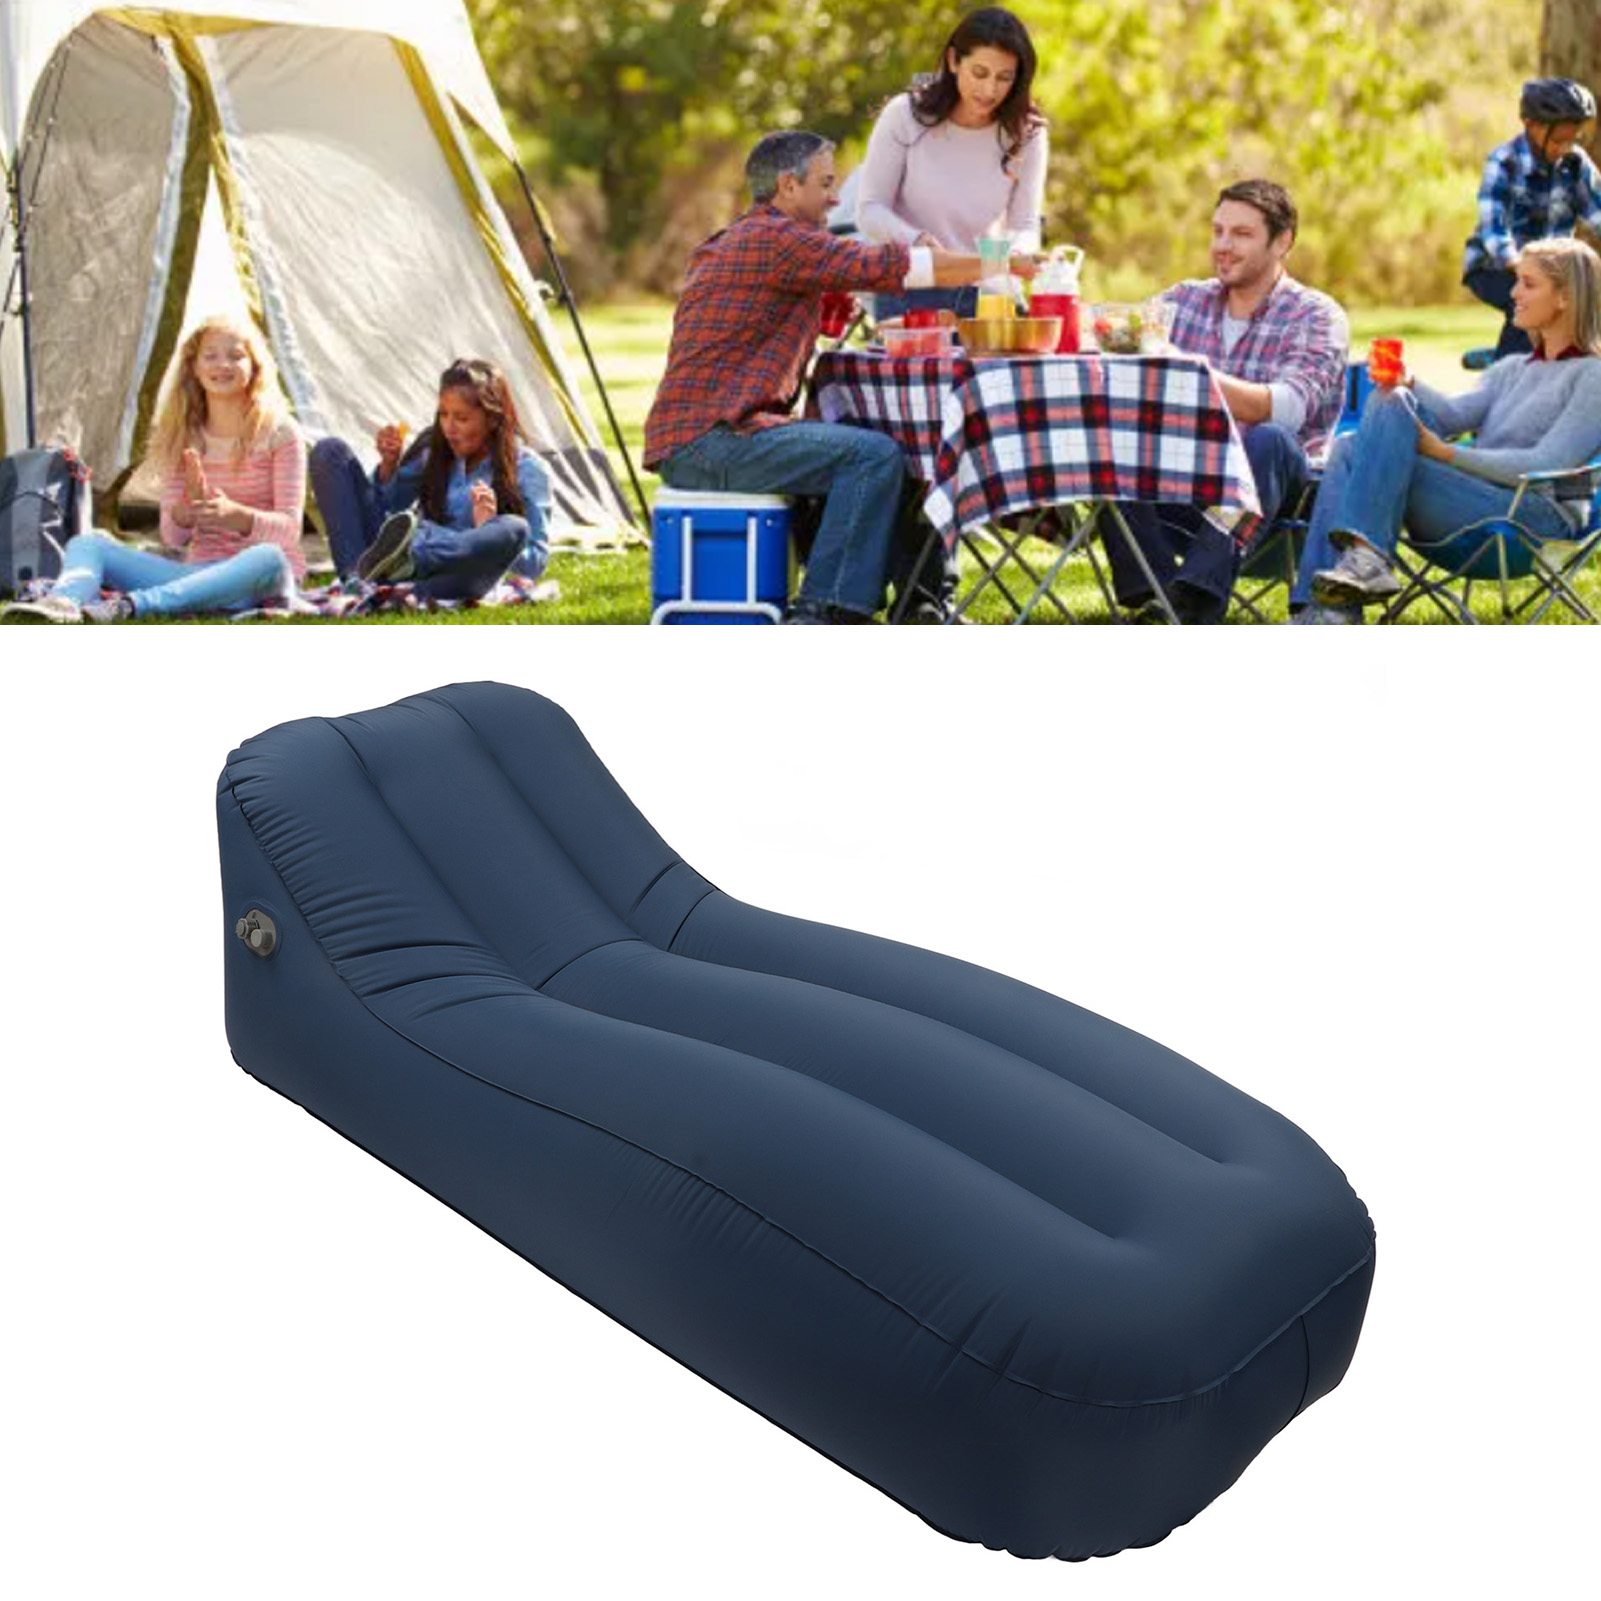 (RoyalBlue)Self Inflating Sleeping Pad Camping Sleeping Mattress Portable